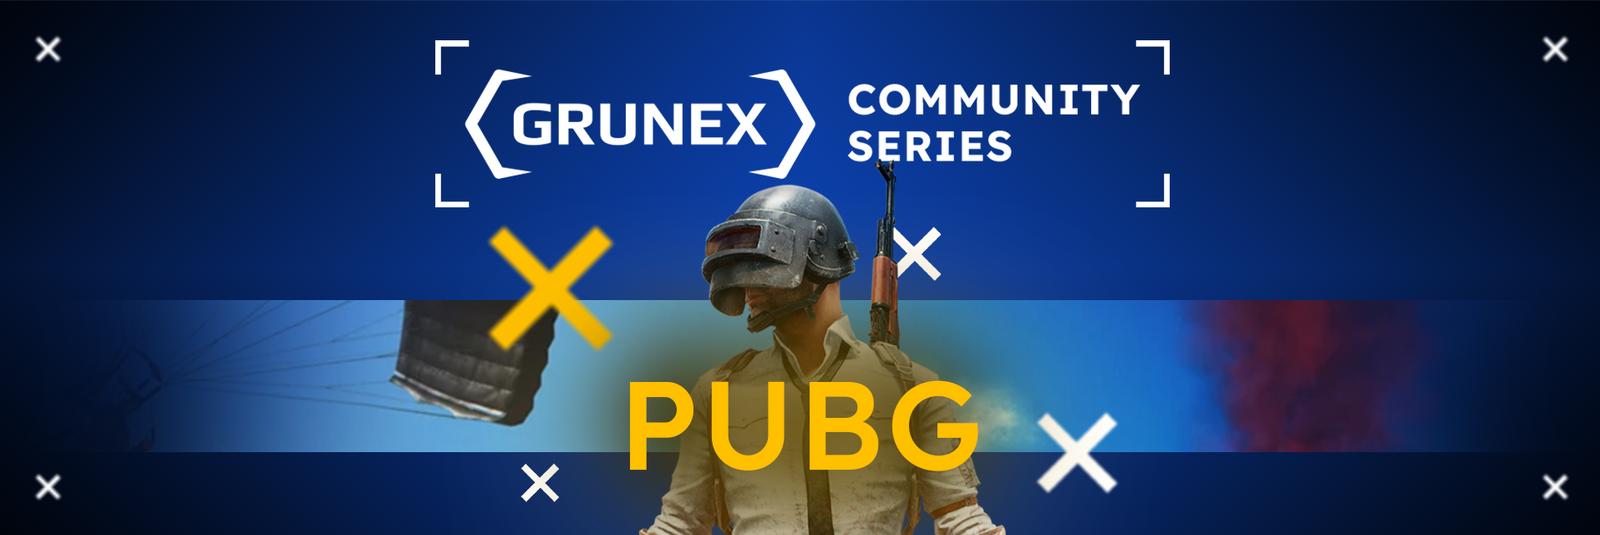 GRUNEX COMMUNITY SERIES PUBG SQUAD CUP #1